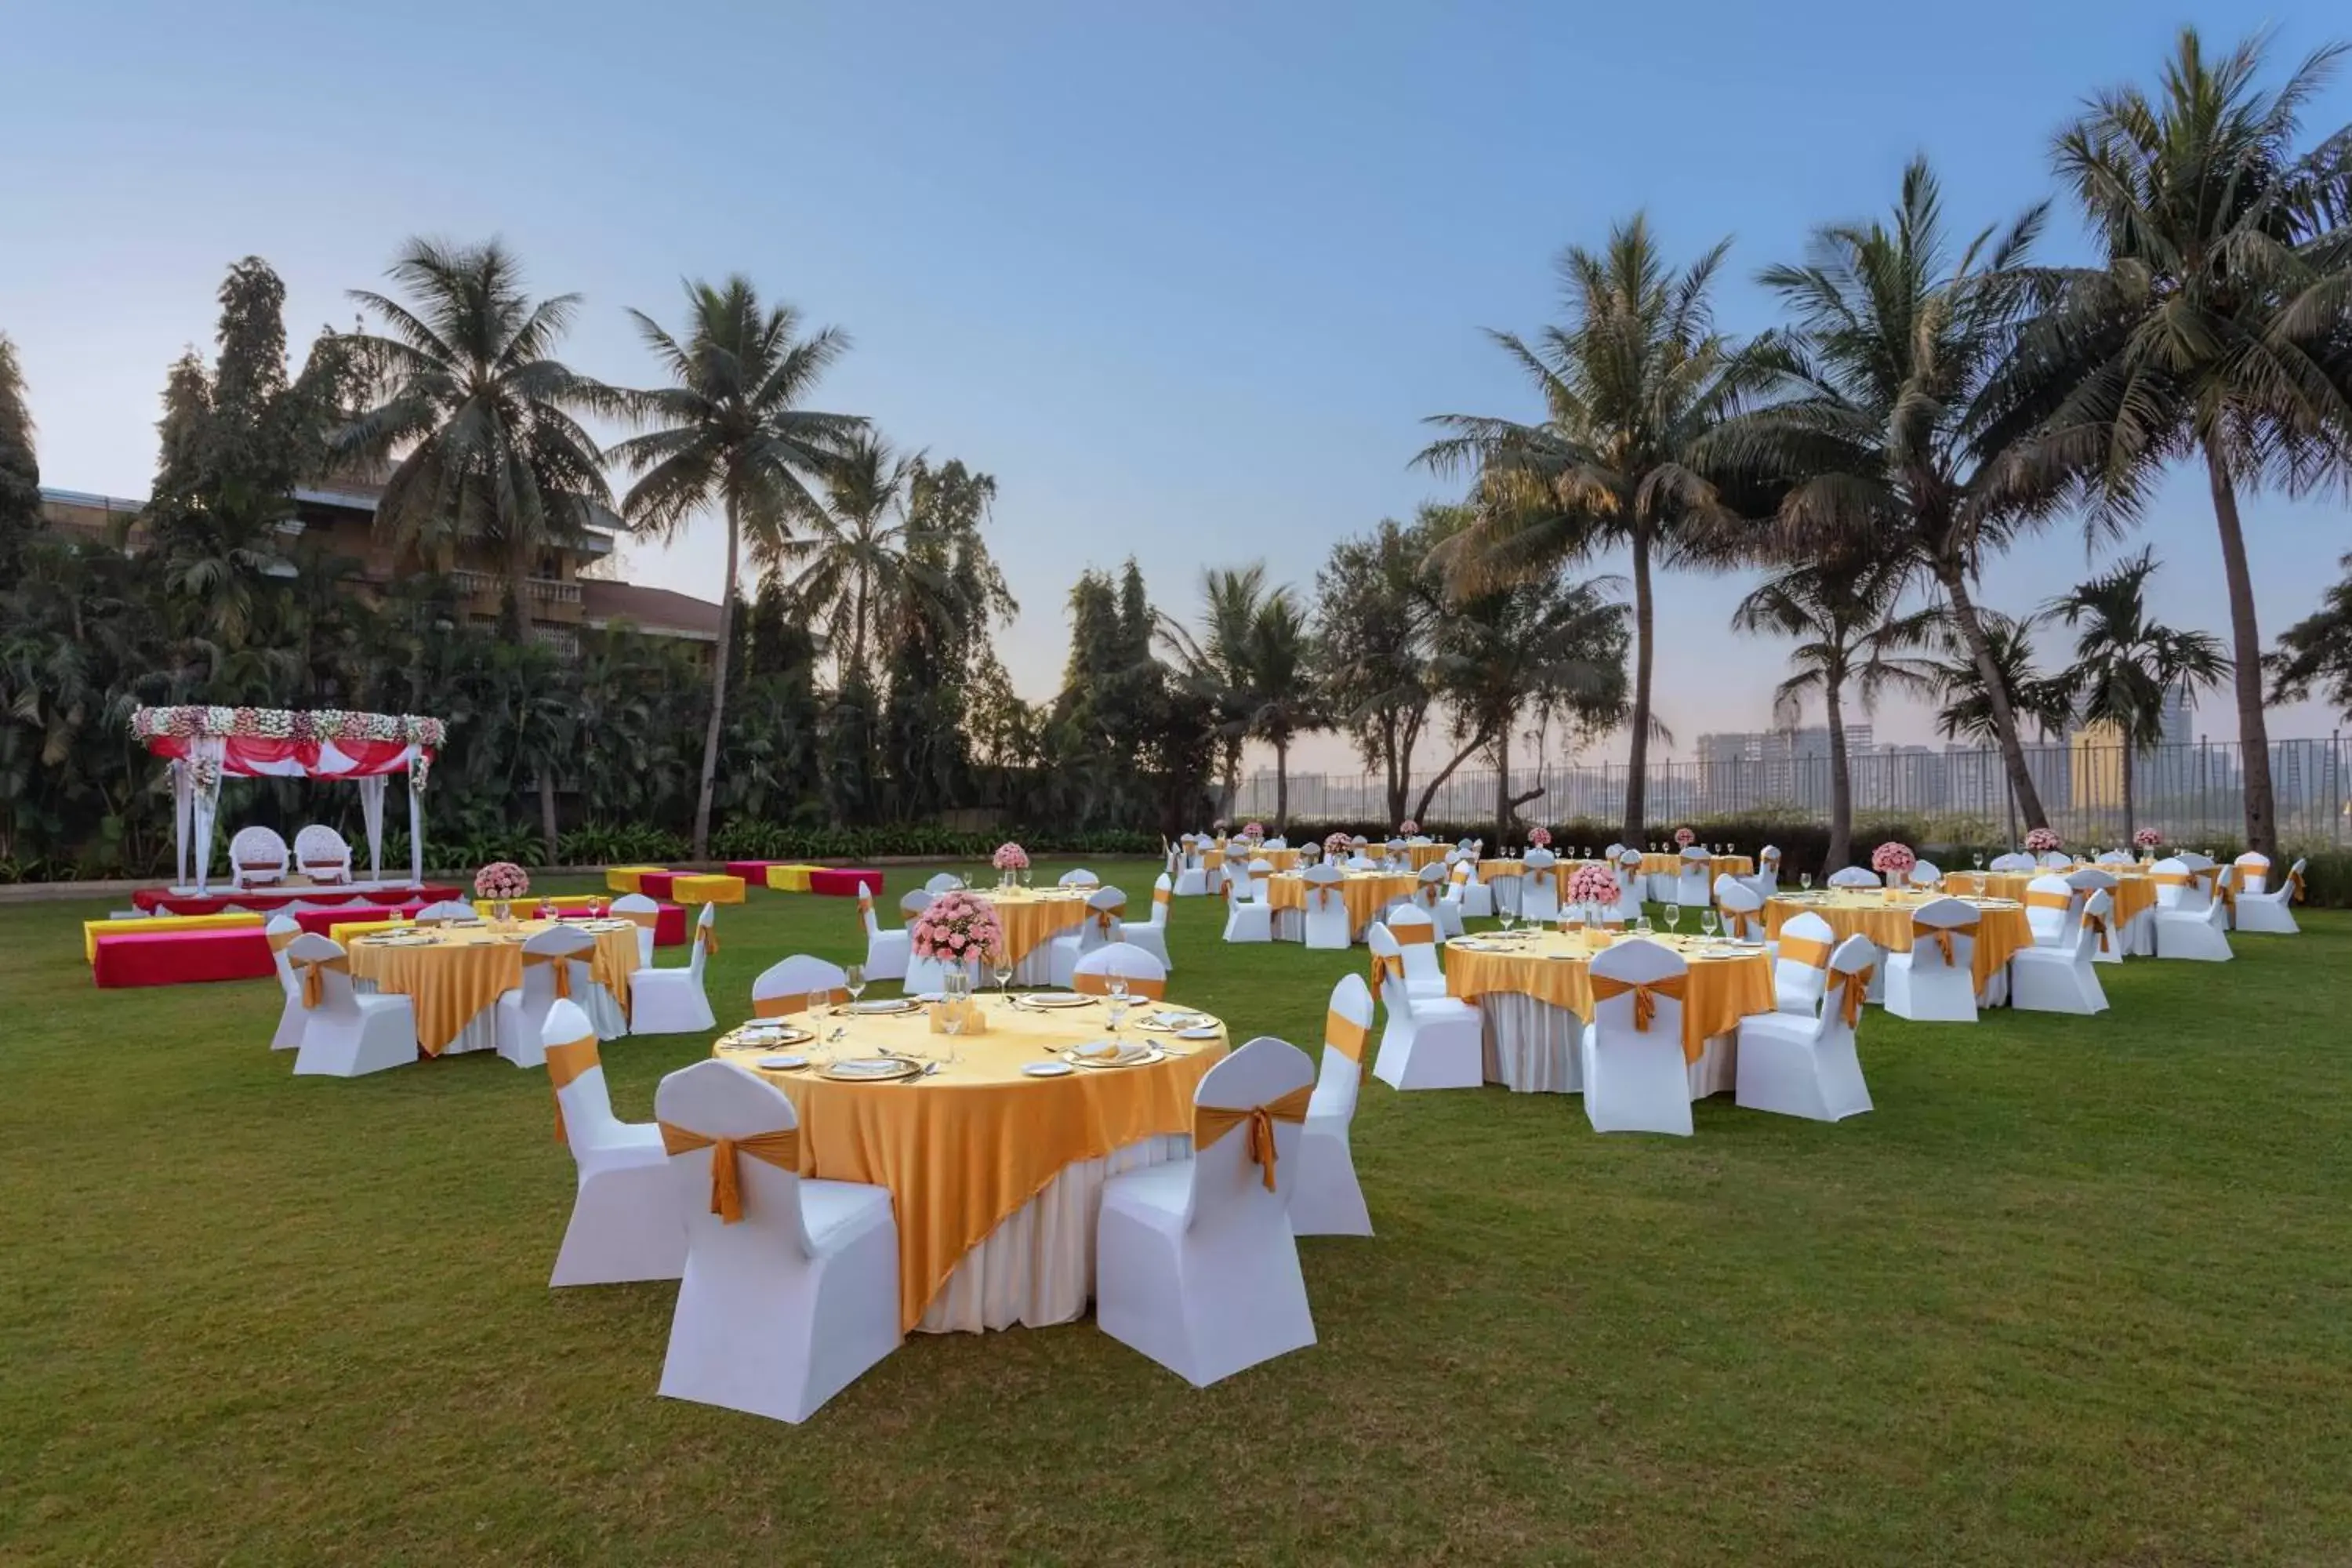 Banquet/Function facilities, Banquet Facilities in Surat Marriott Hotel